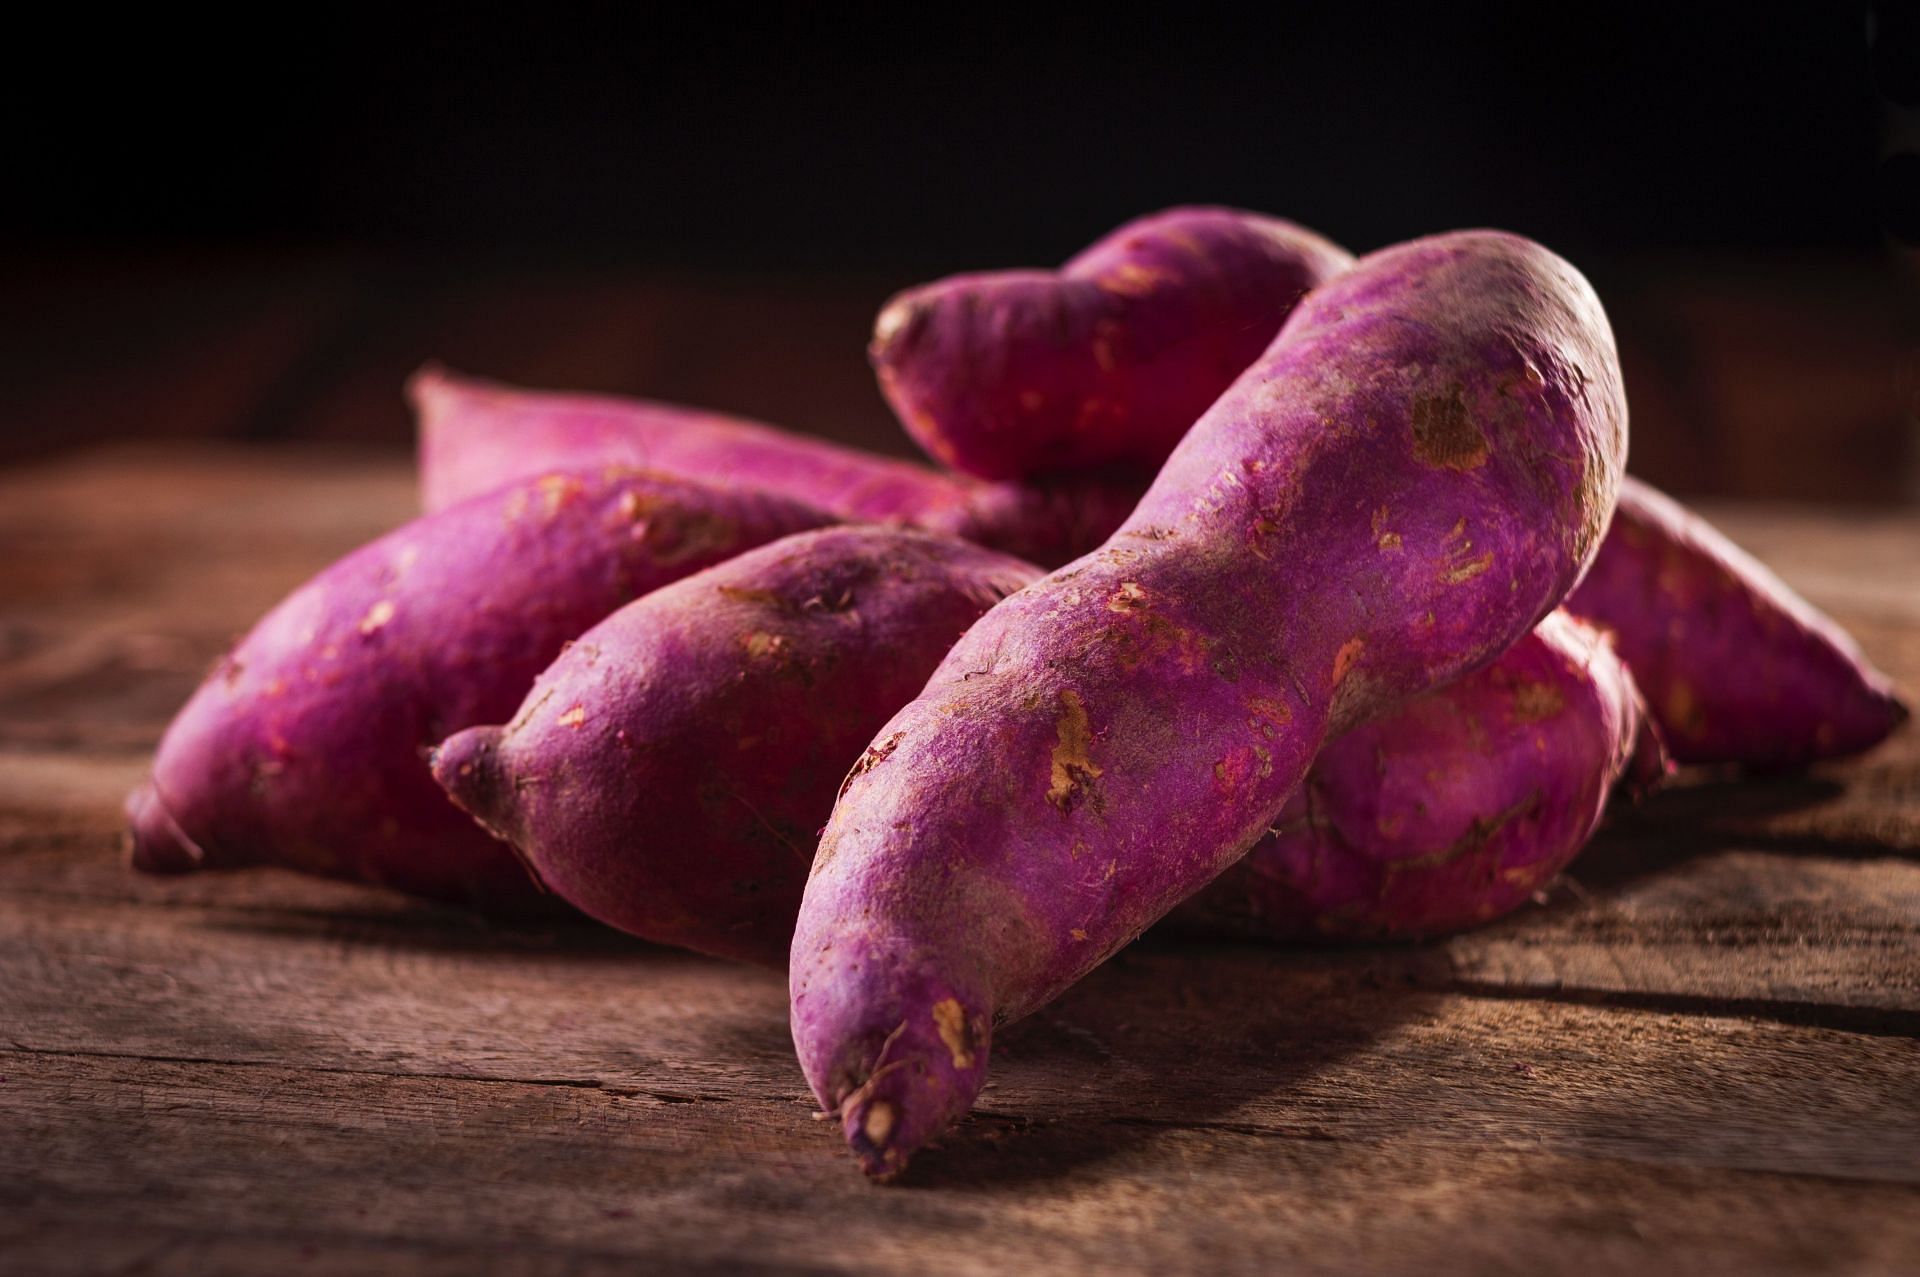 Sweet potatoes are a great source of potassium. (Image via Pexels/ Marcelo Verfe)